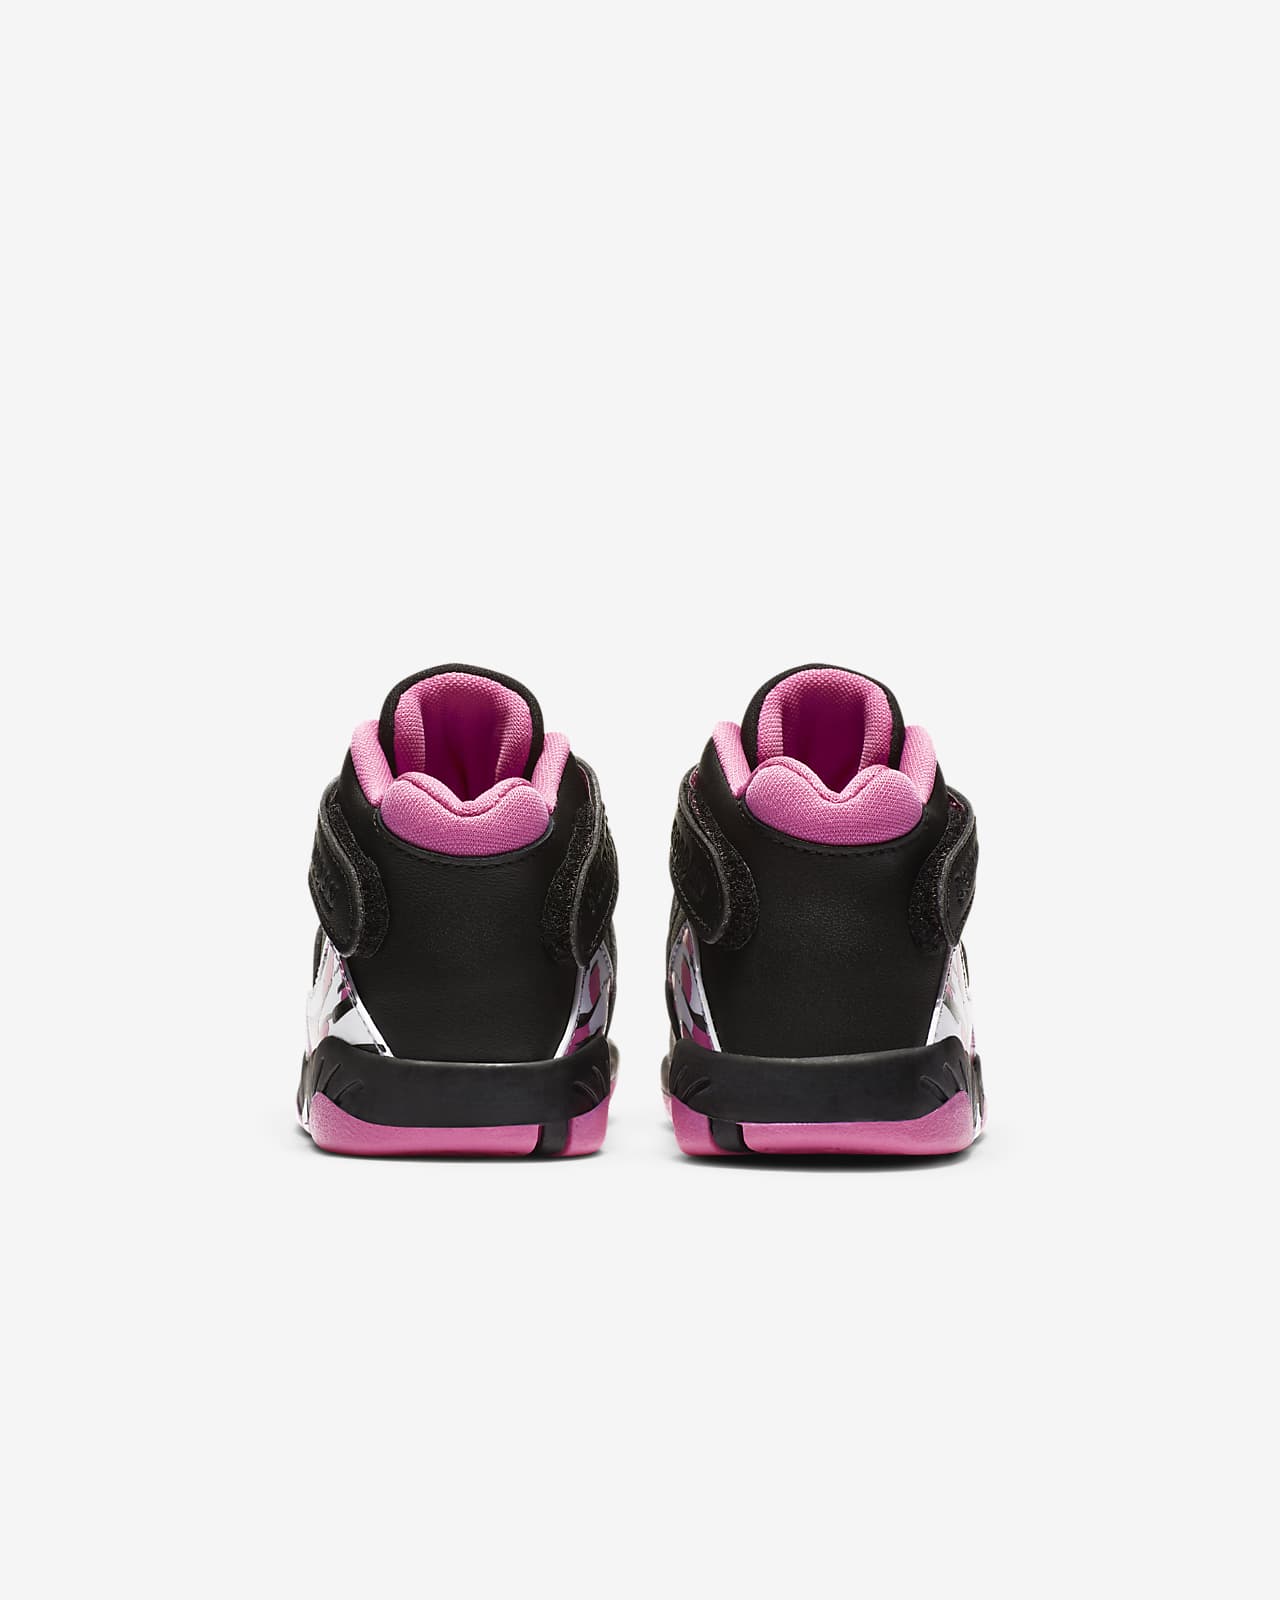 Jordan 8 Retro Infant/Toddler Shoe 